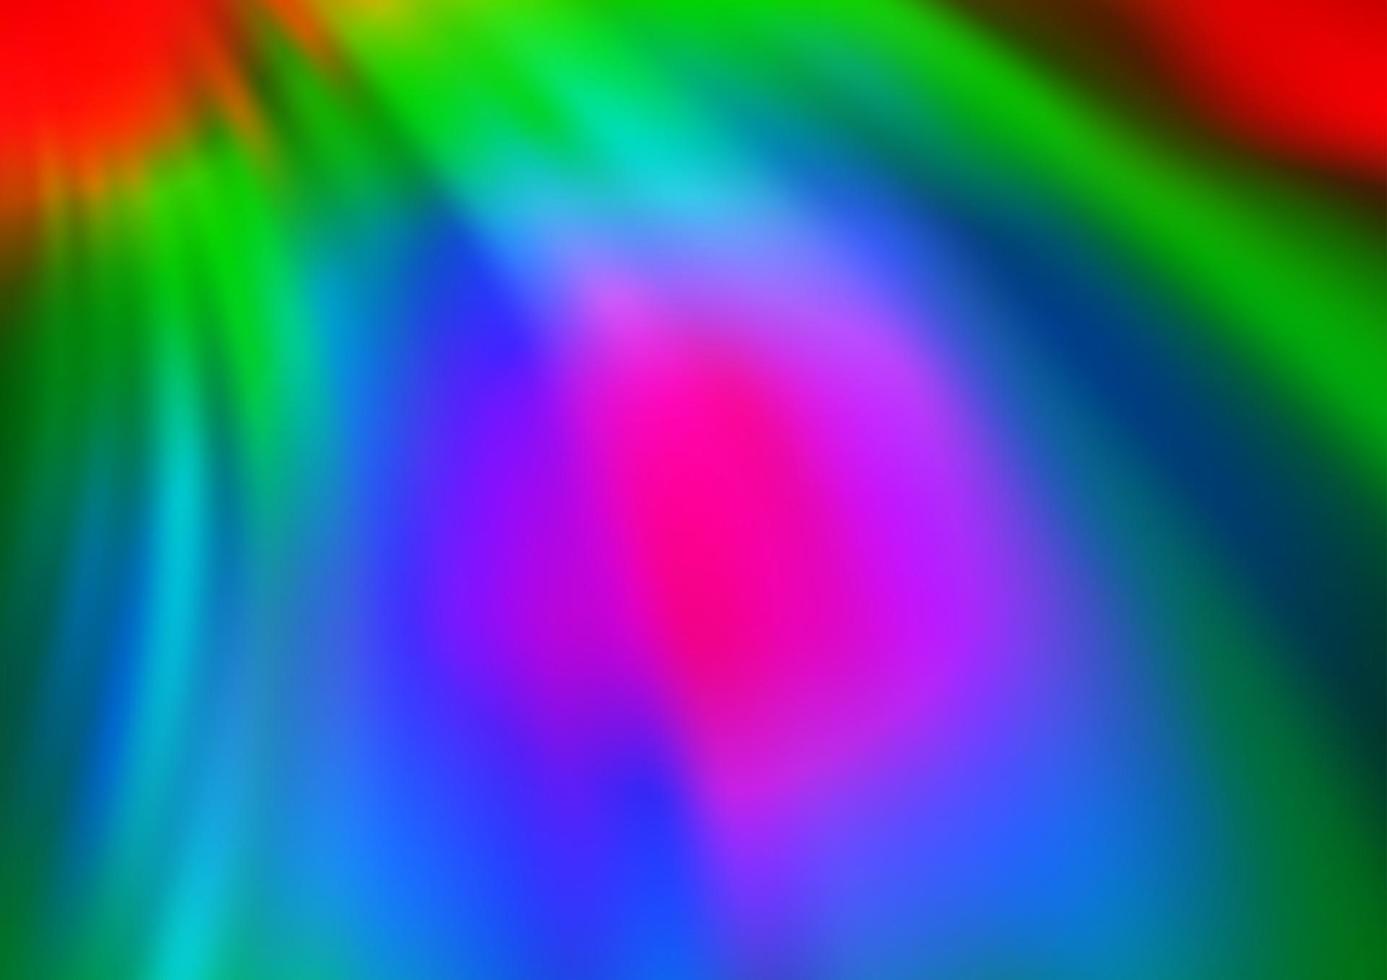 luz multicolor, padrão de vetor de arco-íris com círculos curvos.